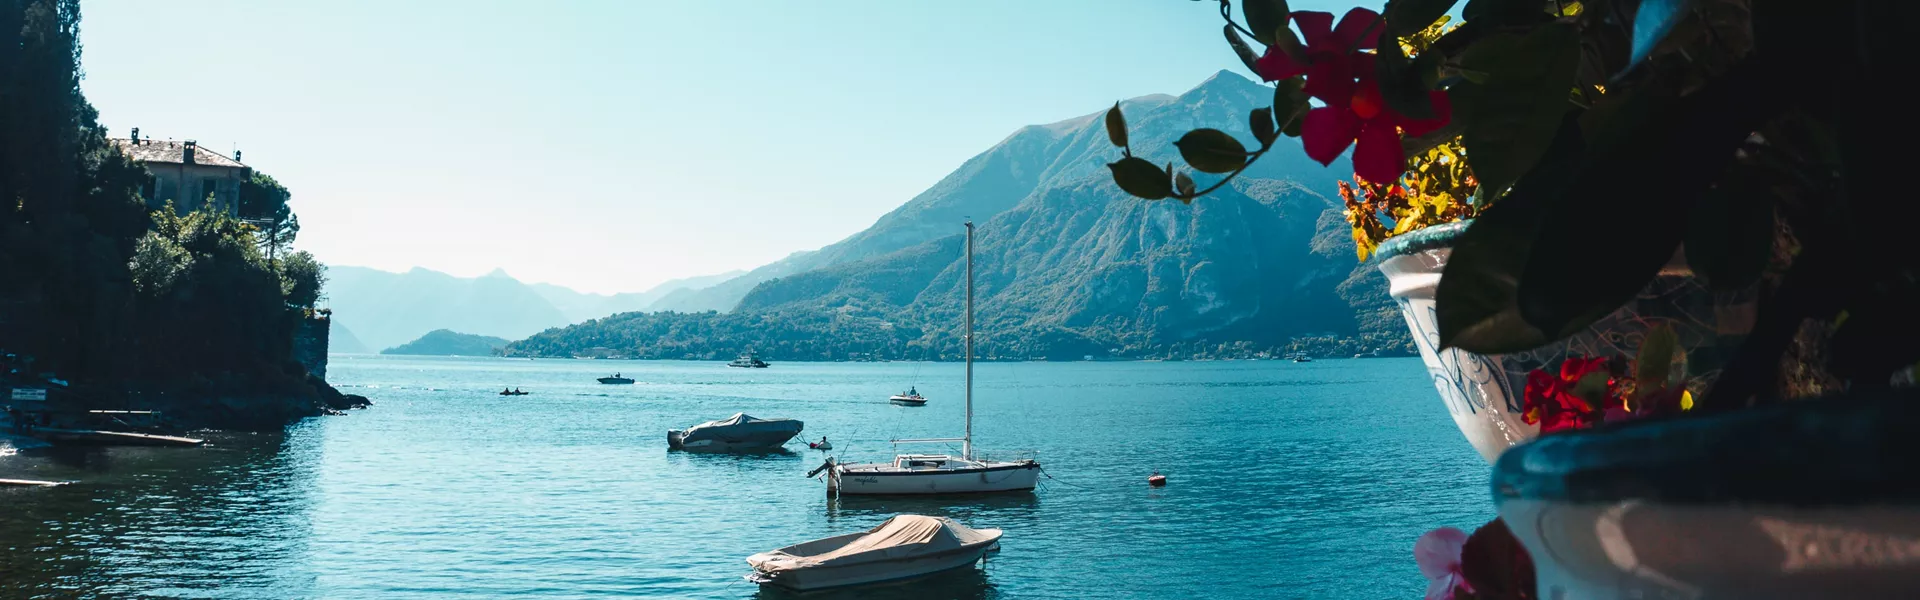 Italy Lake Garda Boat Trip